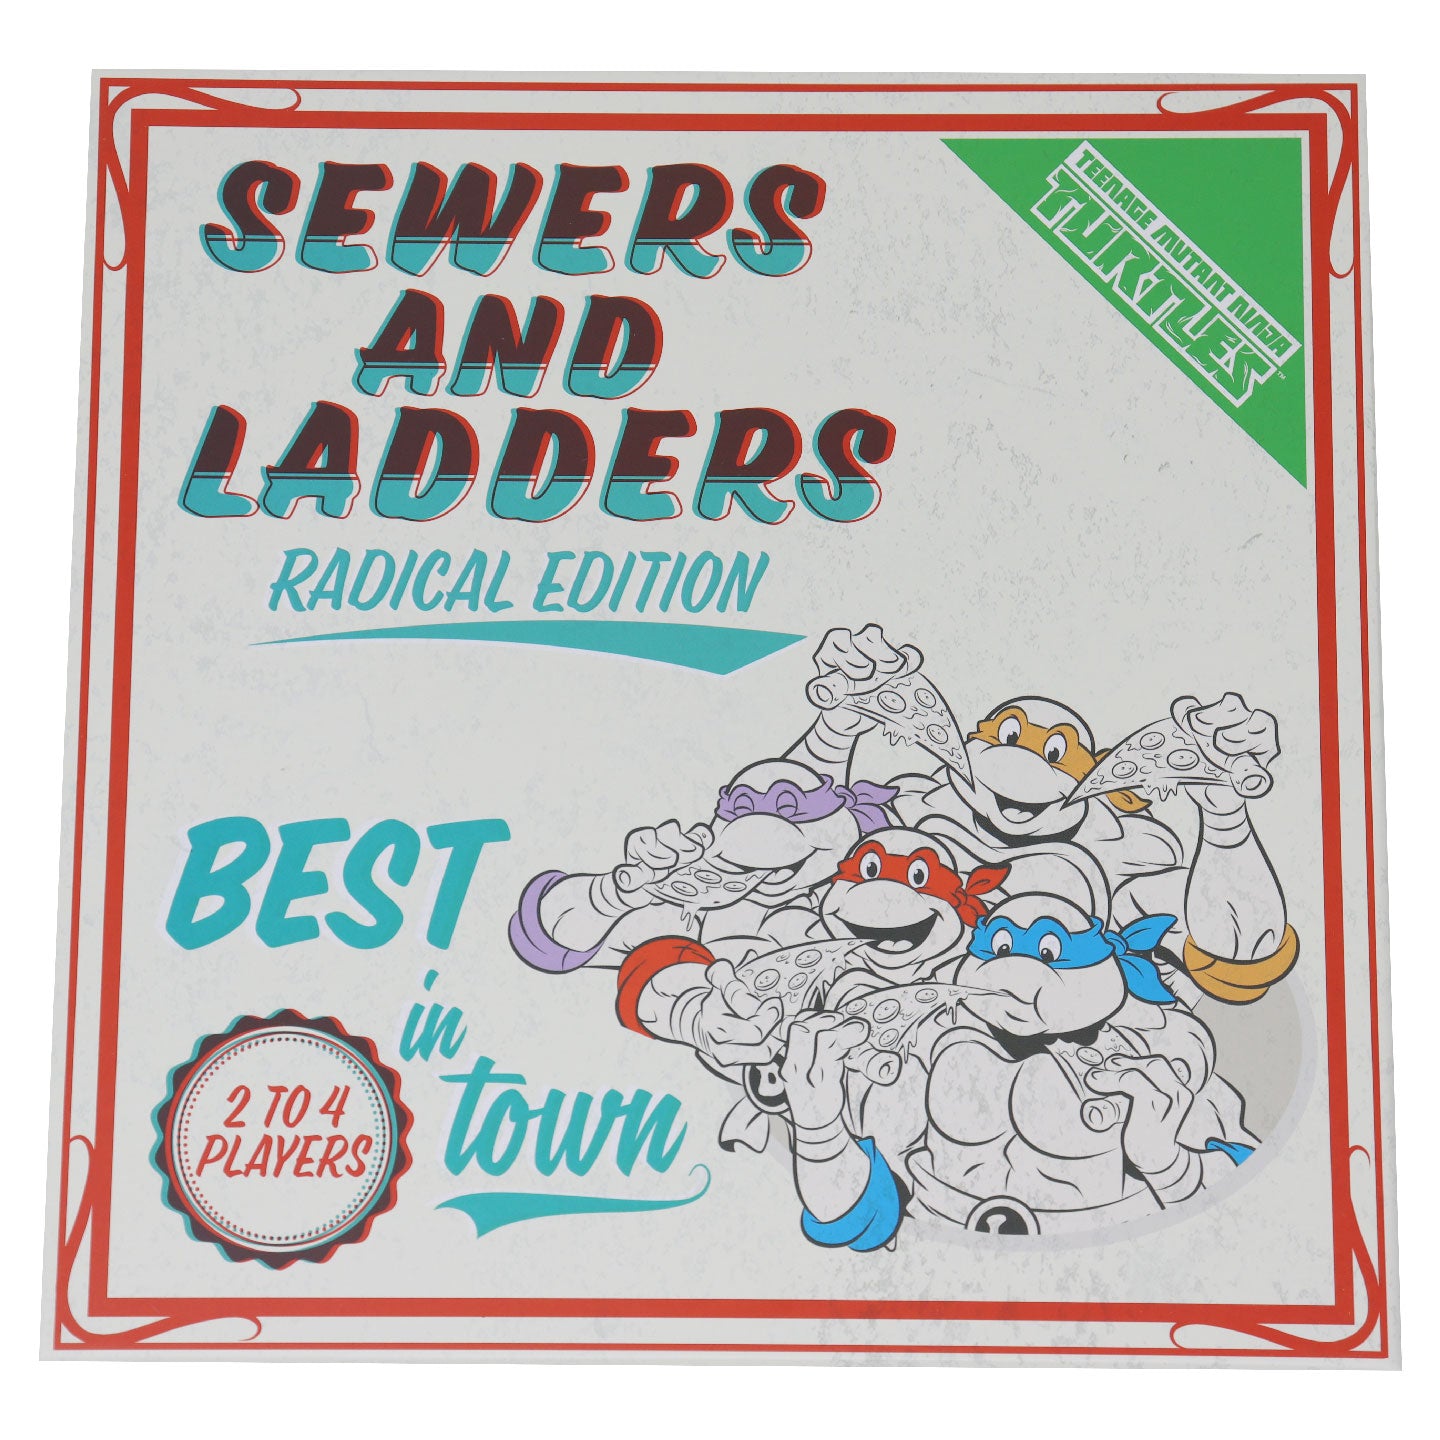 Teenage Mutant Ninja Turtles Sewers and Ladders Radical Edition Board Game